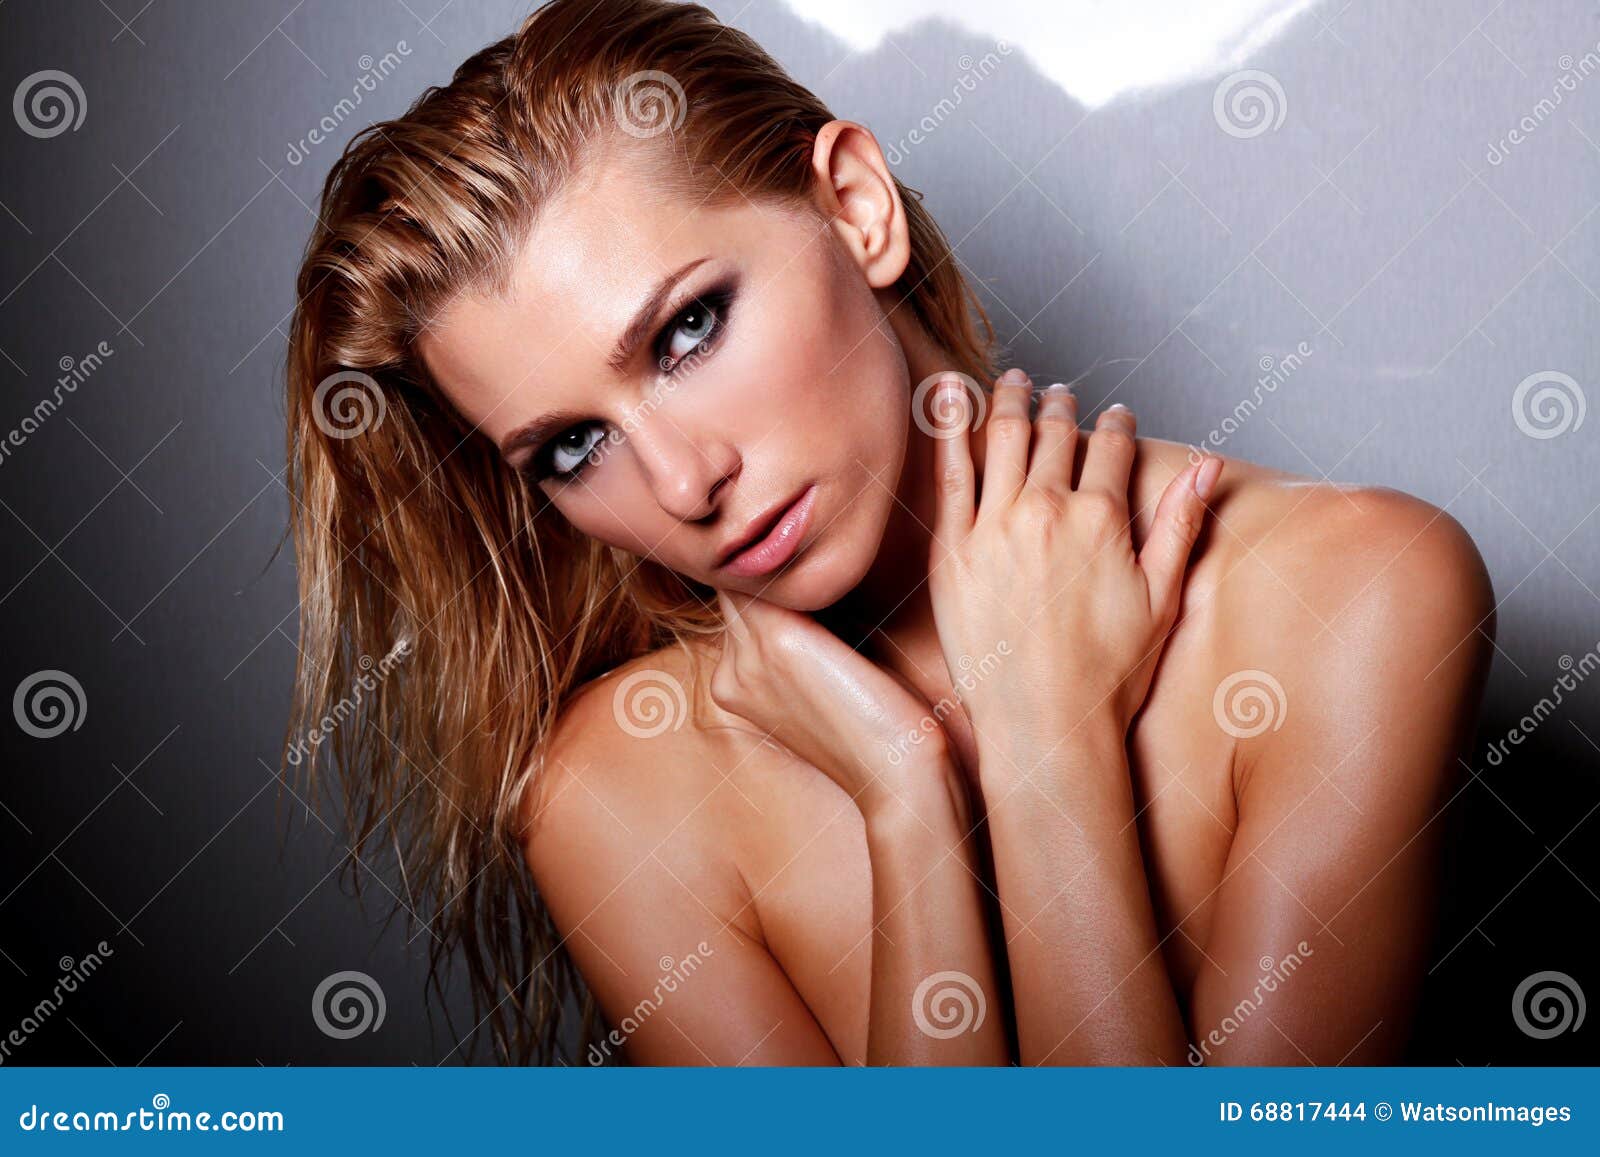 Models nude vogue Paulina Porizkova's